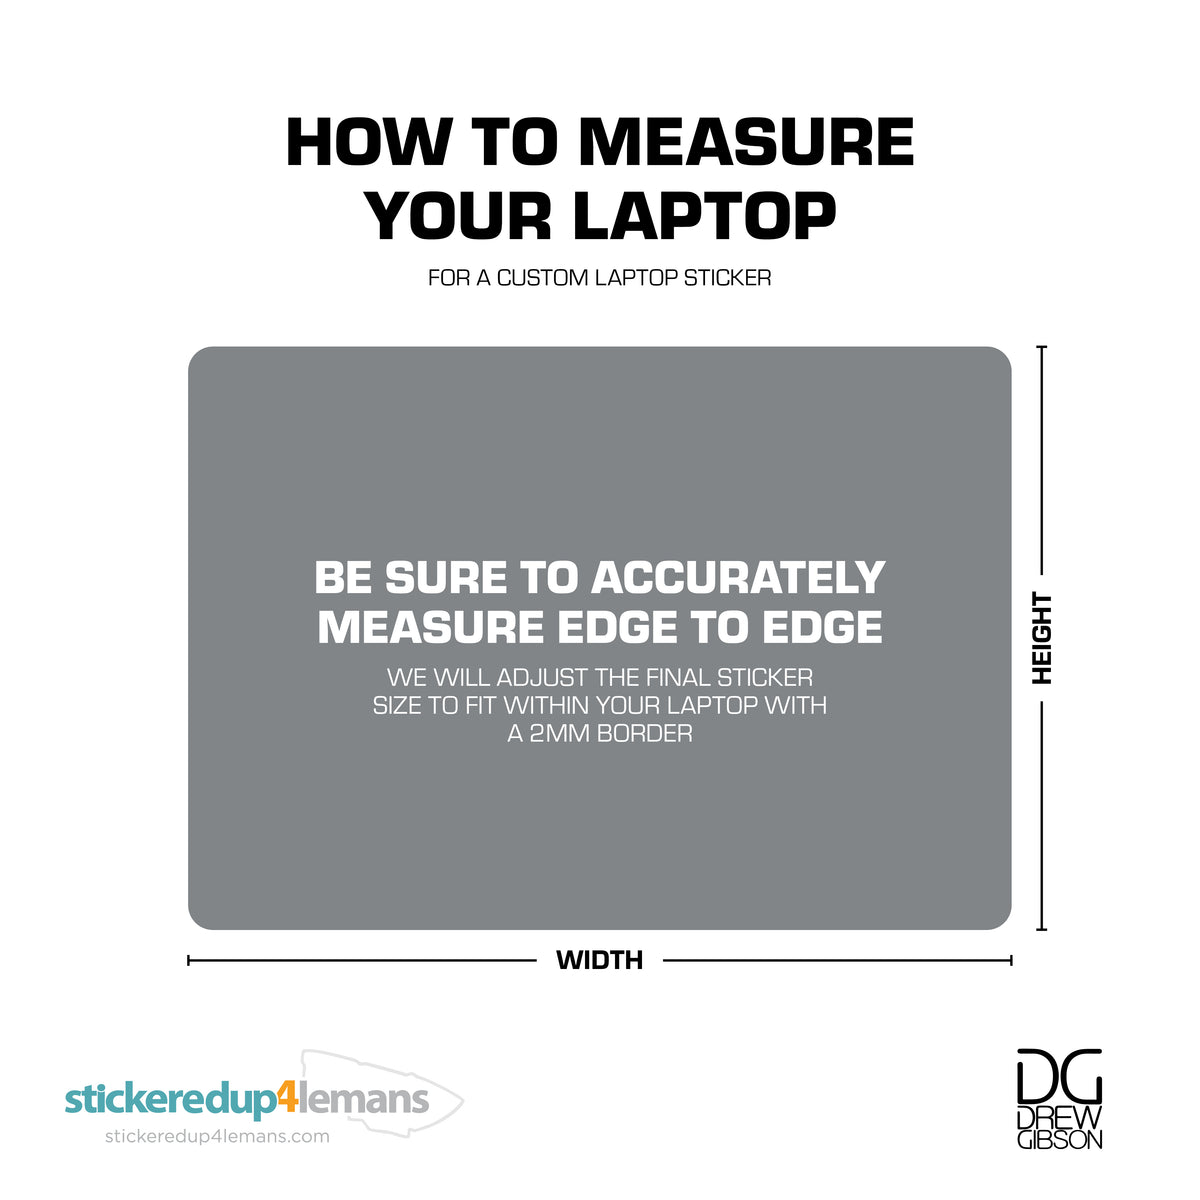 DG #023 Custom Size Laptop Sticker